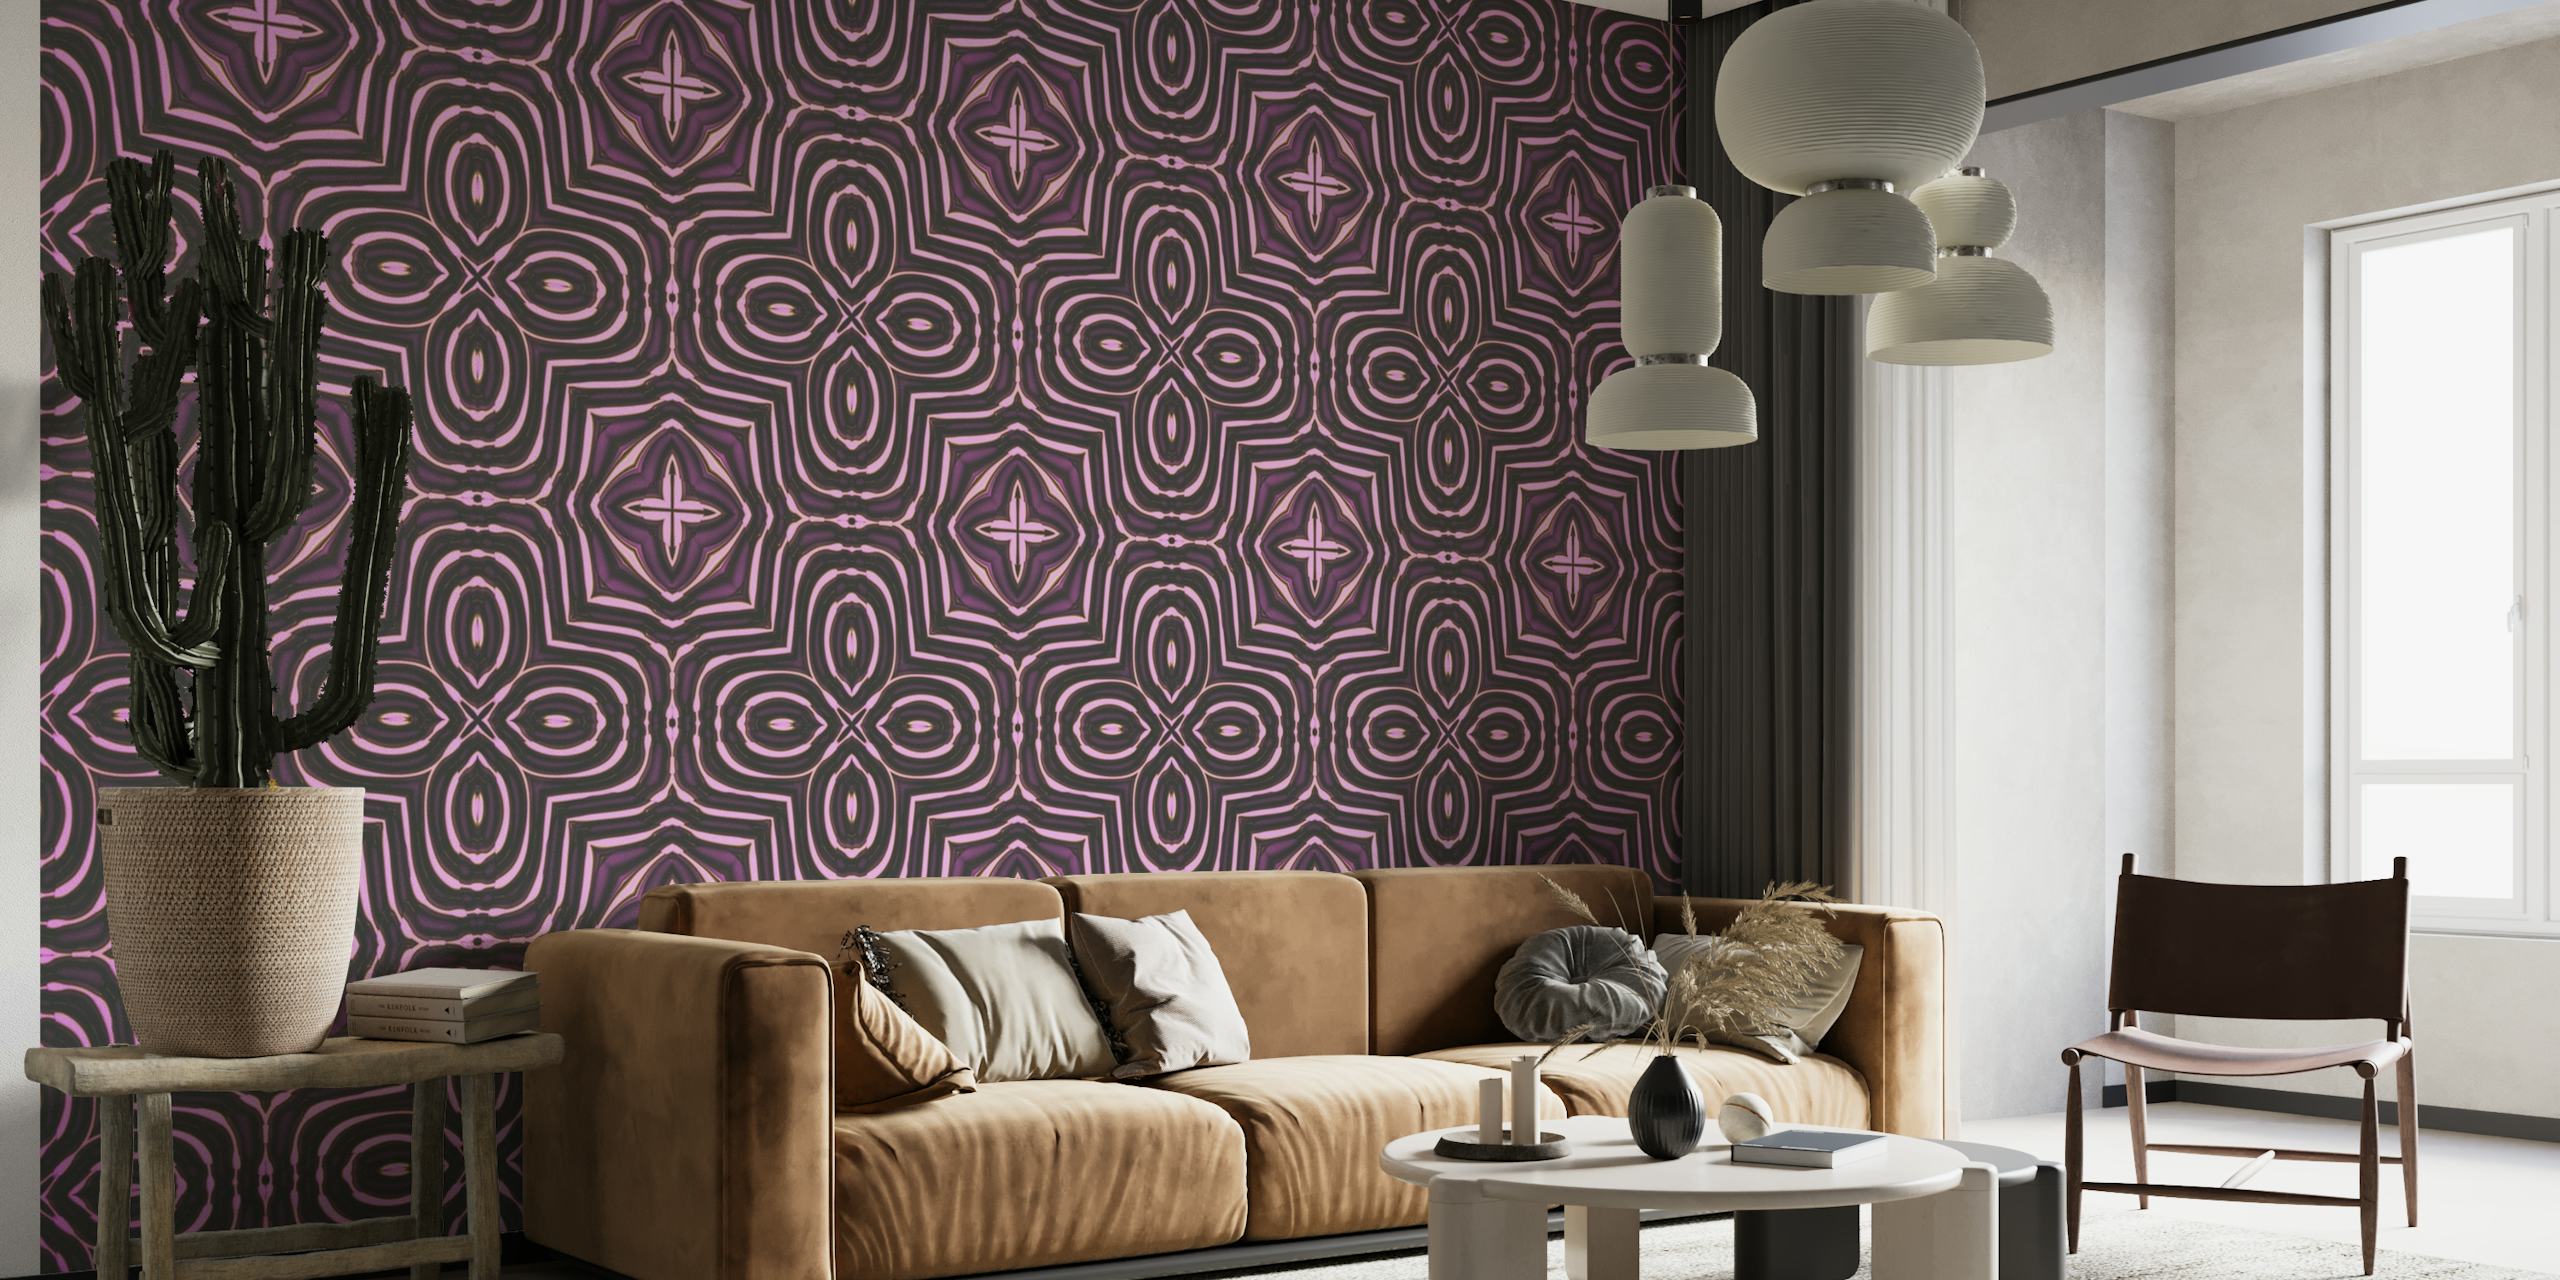 Oriental Tiles pattern wall mural with intricate geometric designs in purple hues